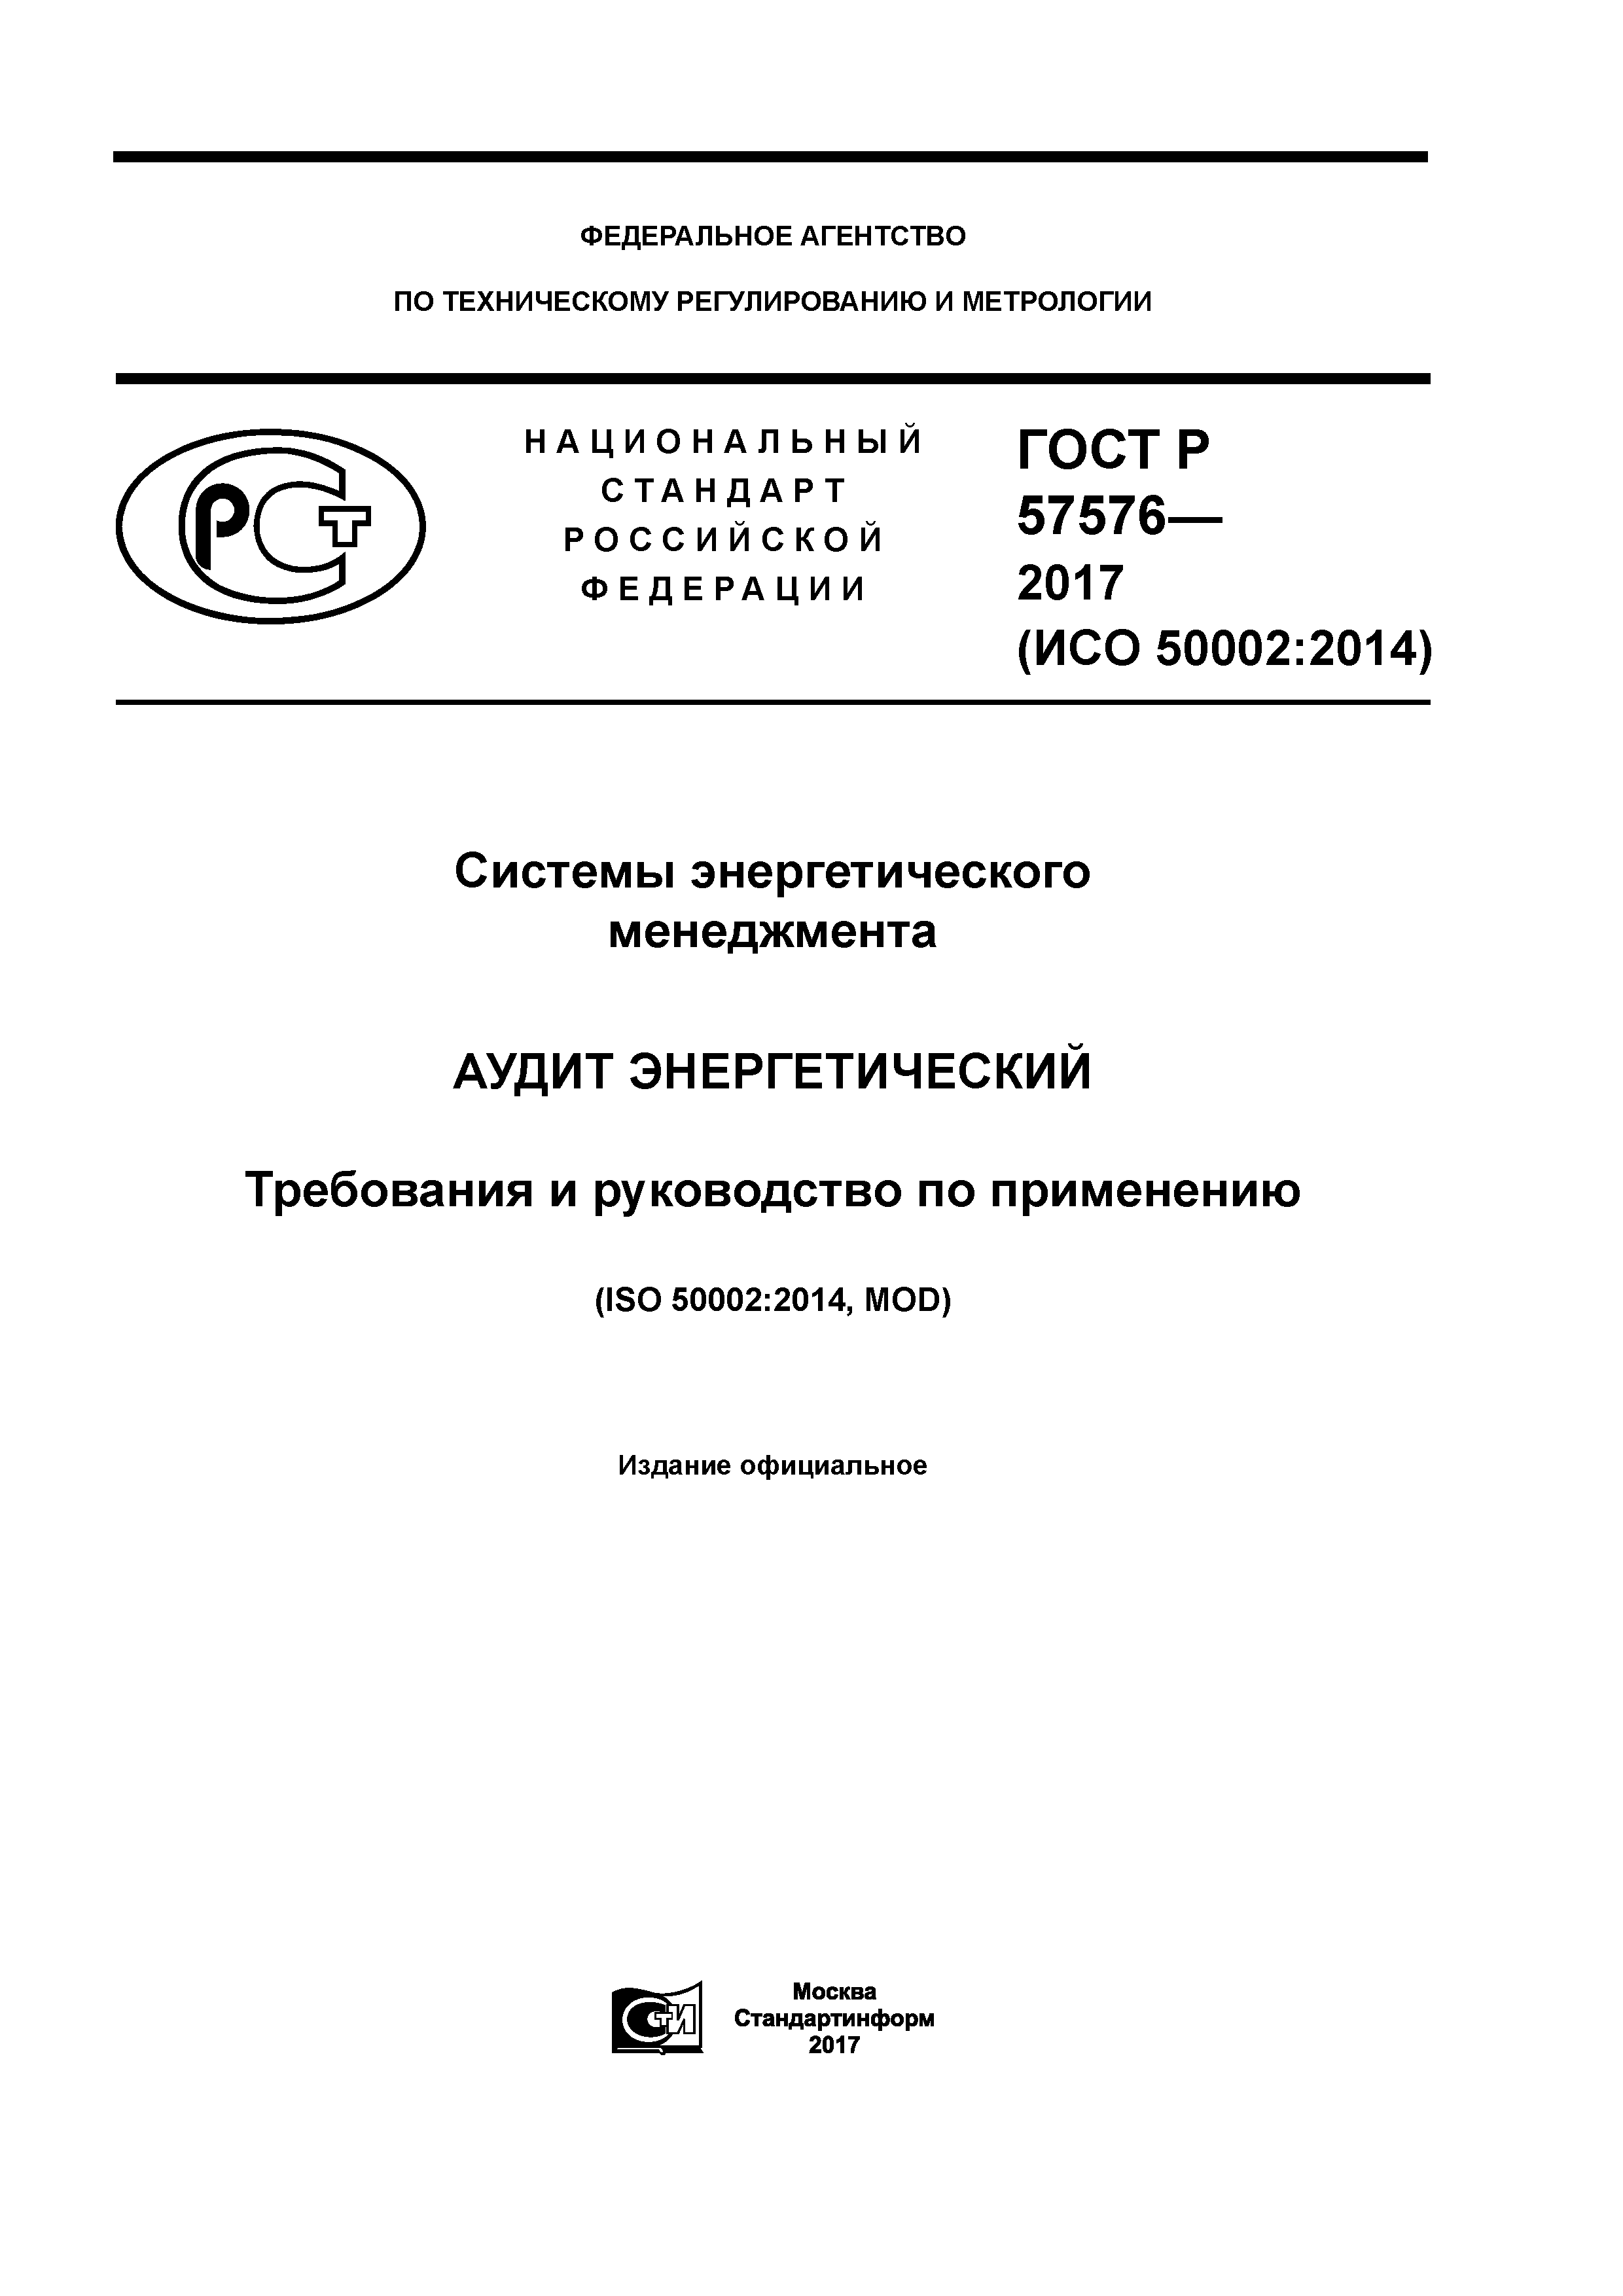 ГОСТ Р 57576-2017